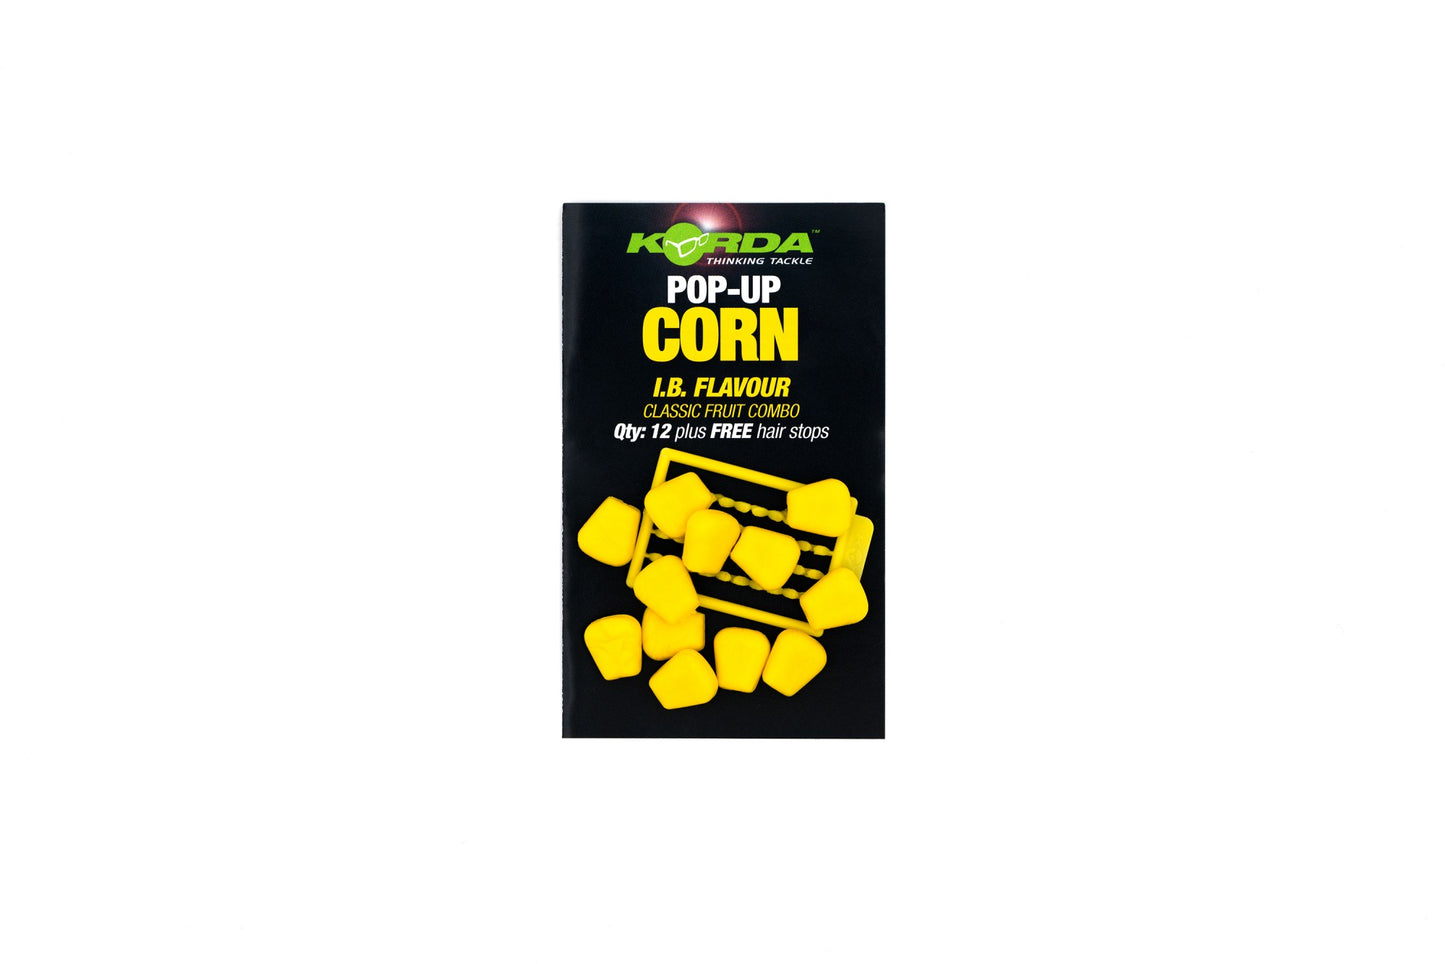 Korda Pop Up Corn Various Banoffee/IB/Fruity Squid